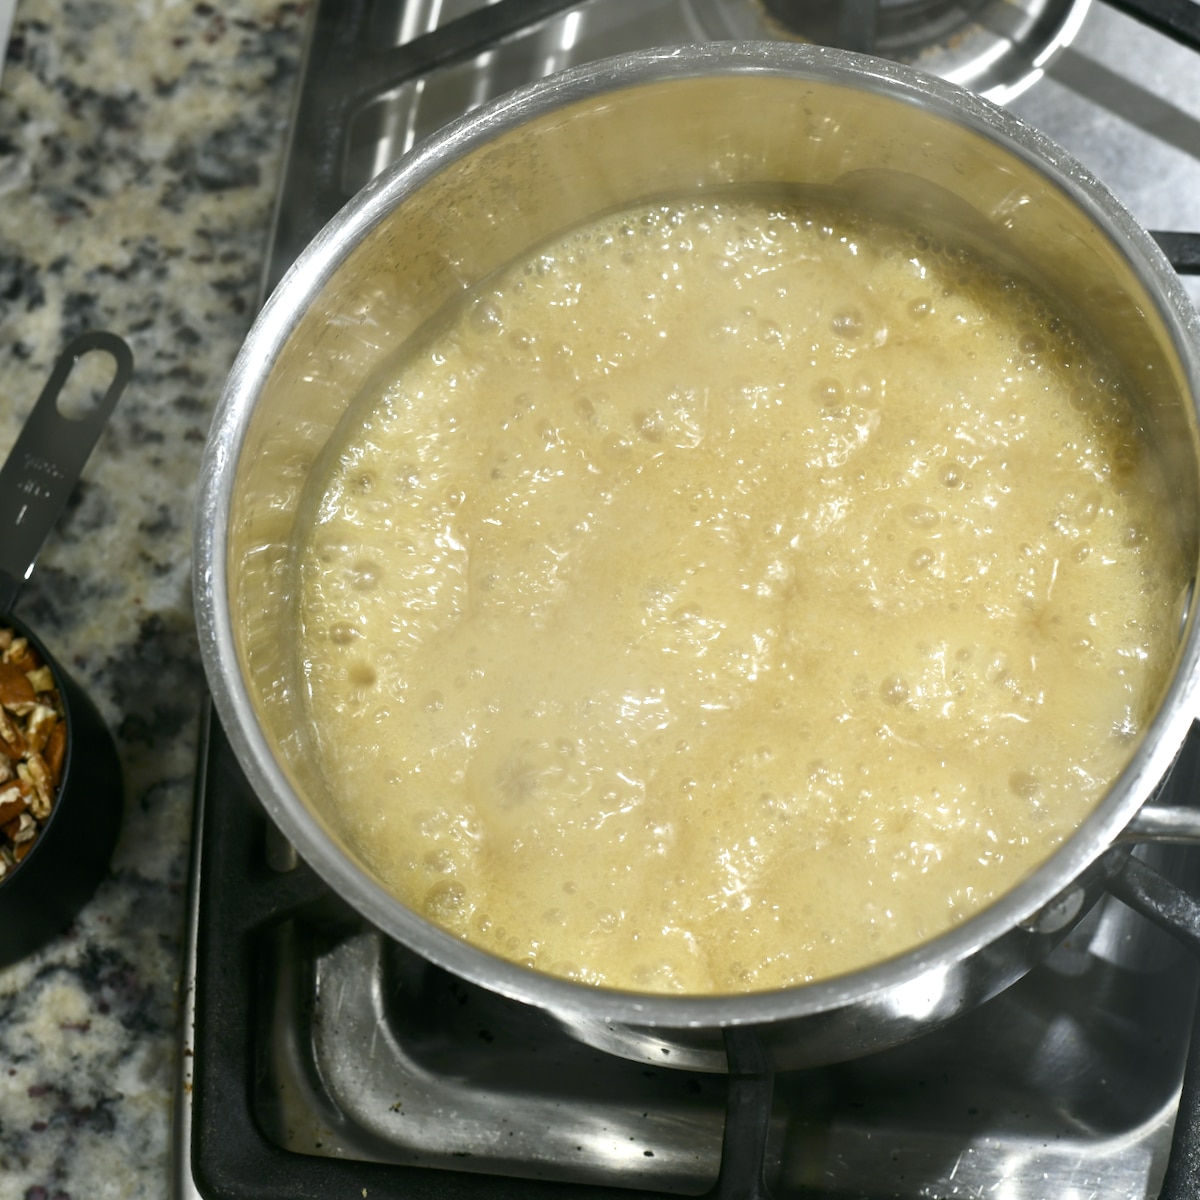 Praline sauce mixture boiling in a saucepan.